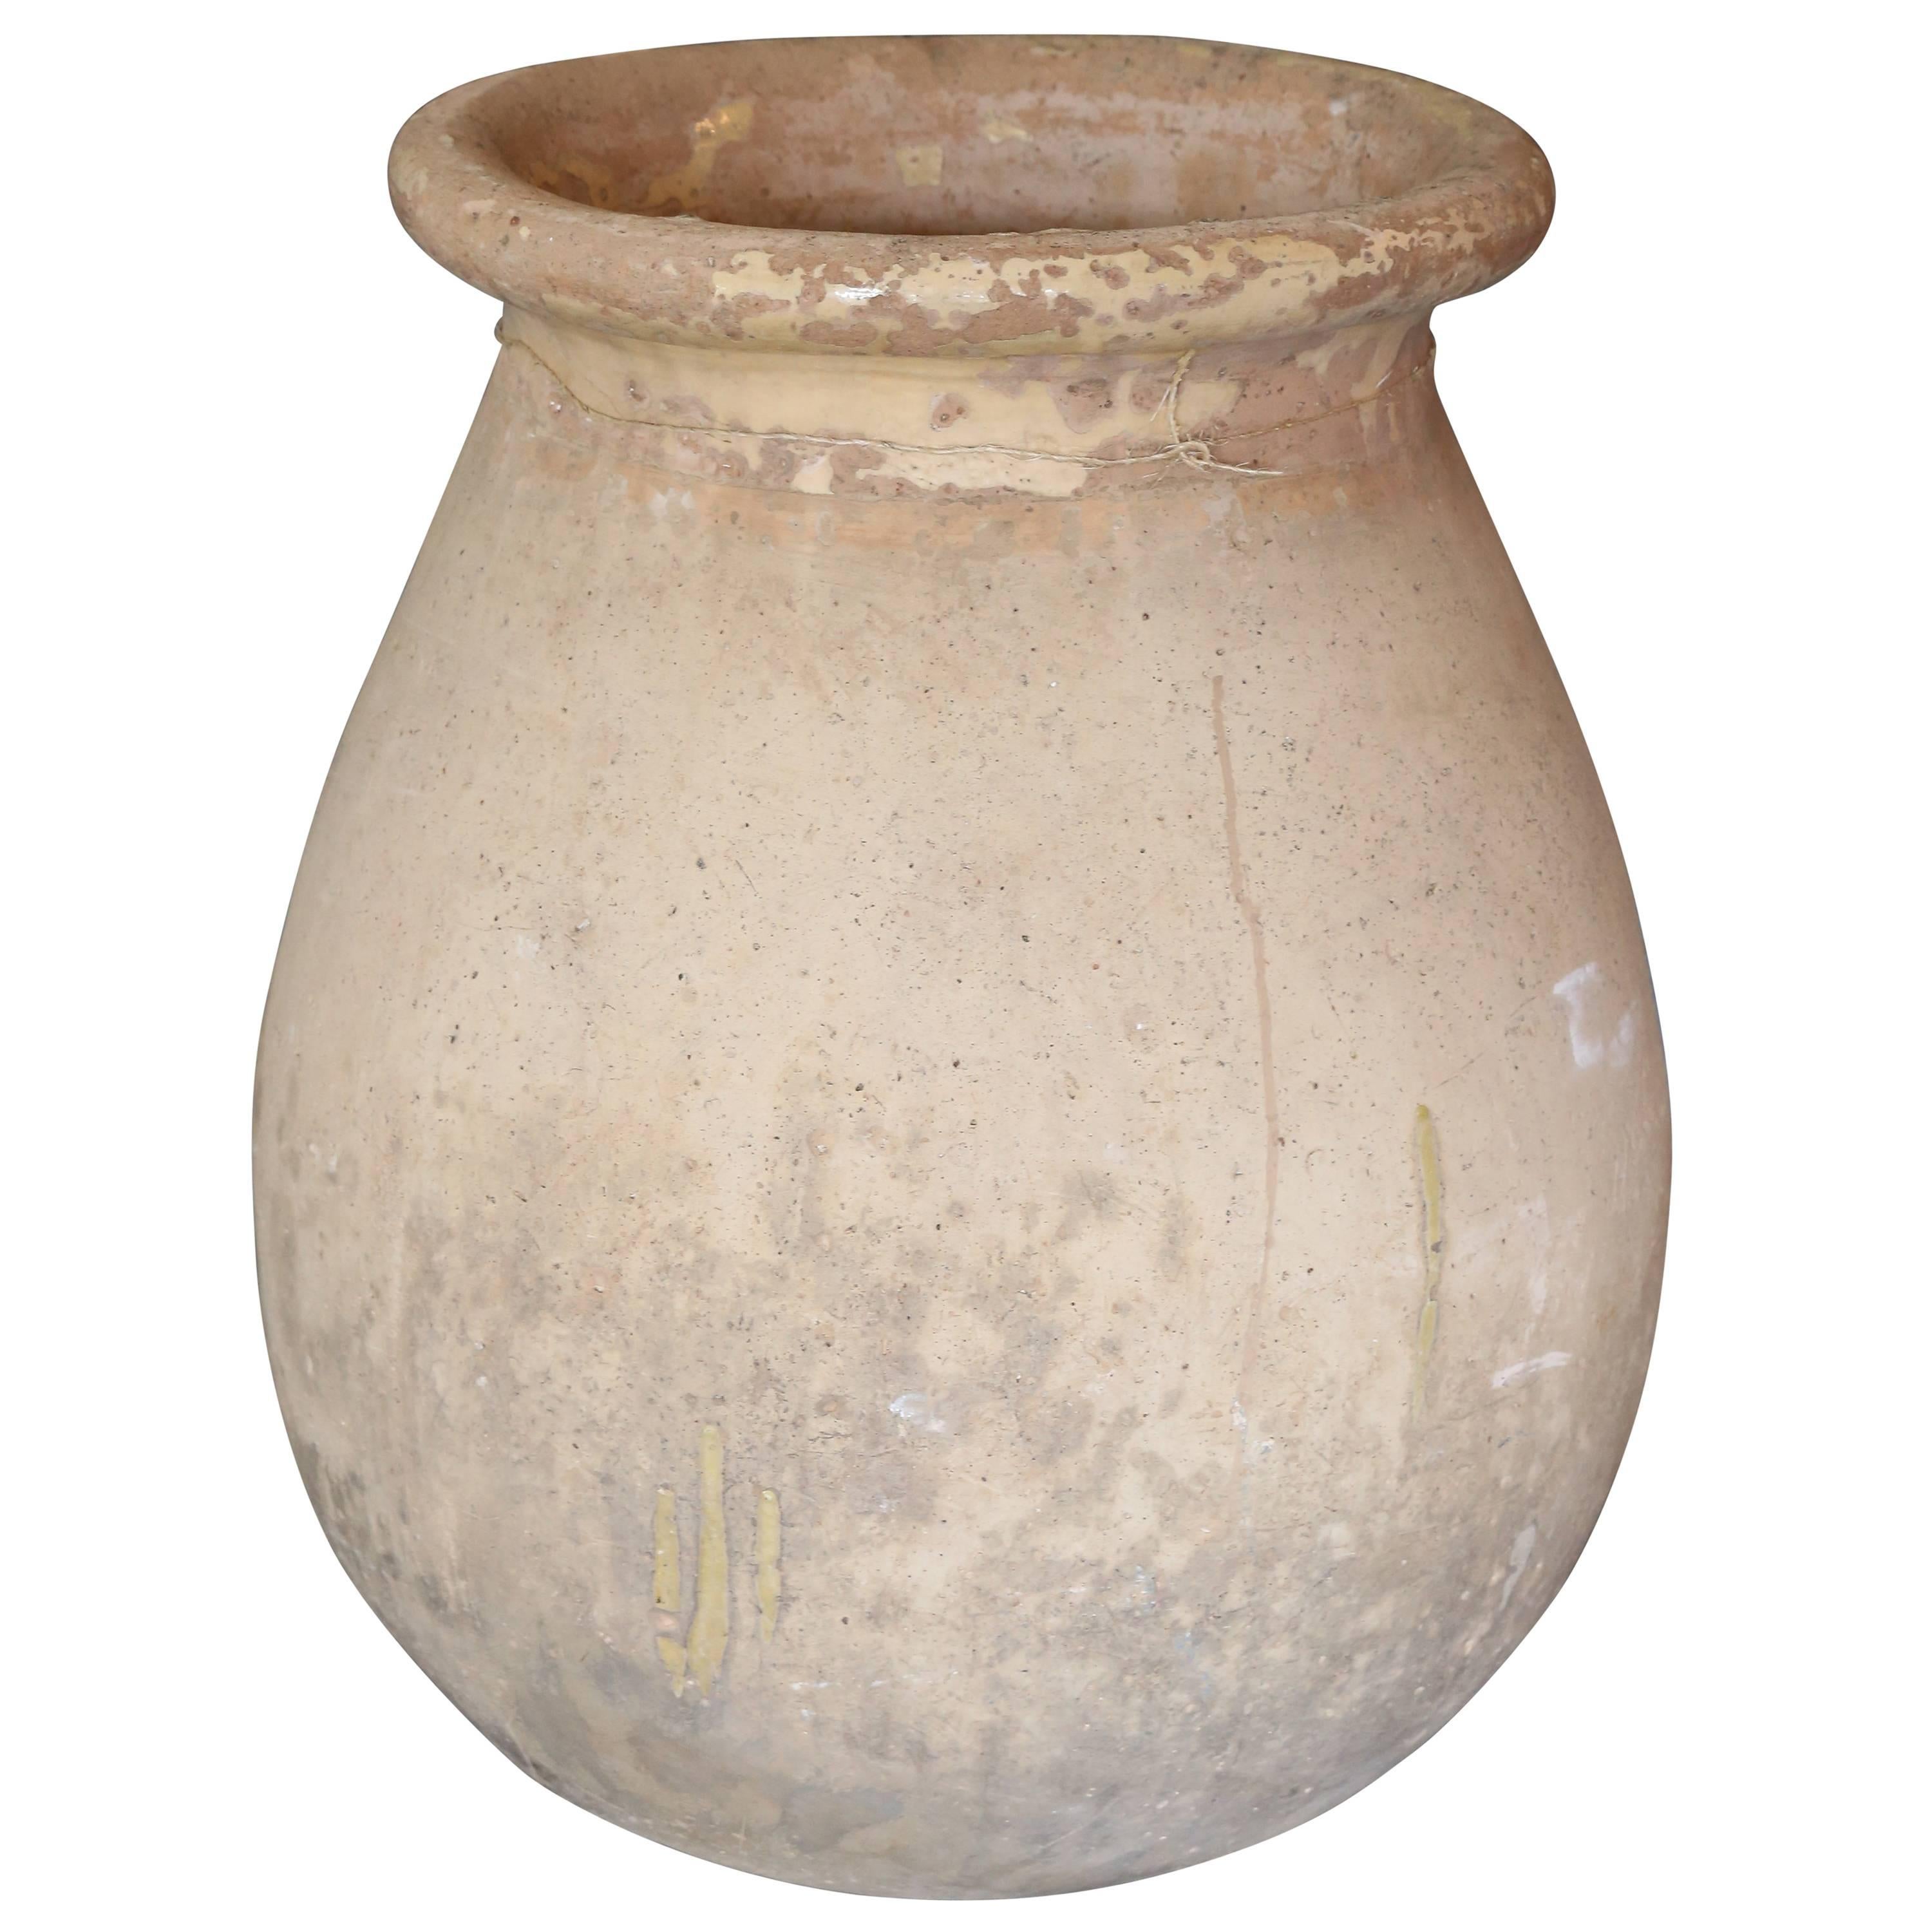 Biot Jar from France